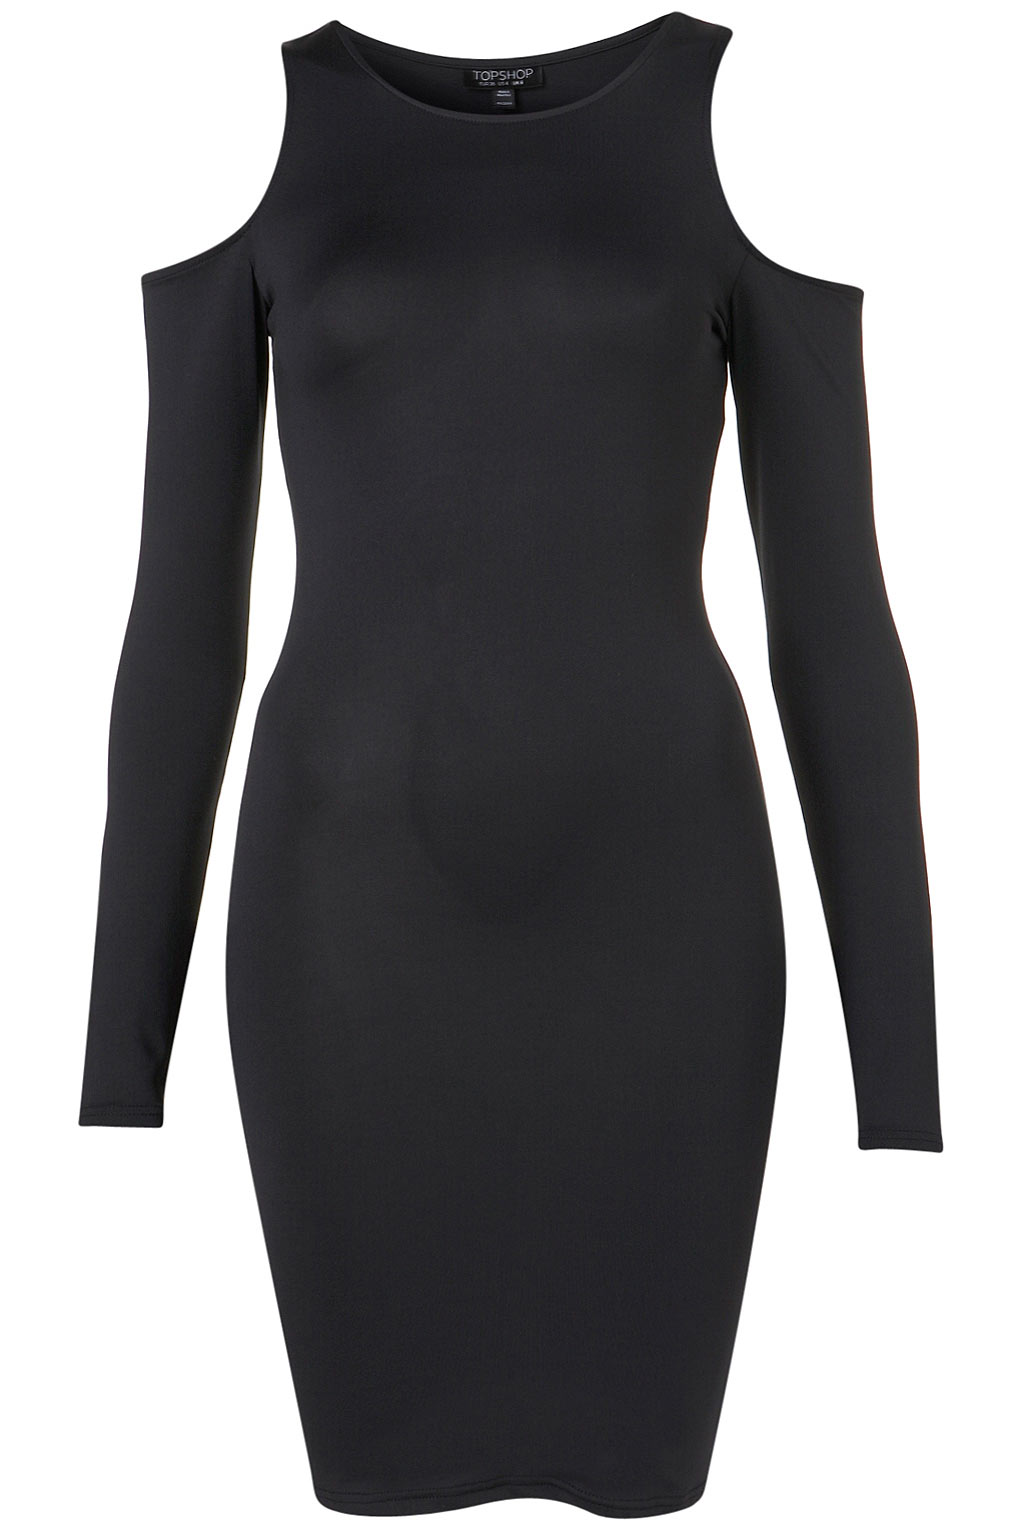 Topshop Open Shoulder Bodycon Dress in Black | Lyst